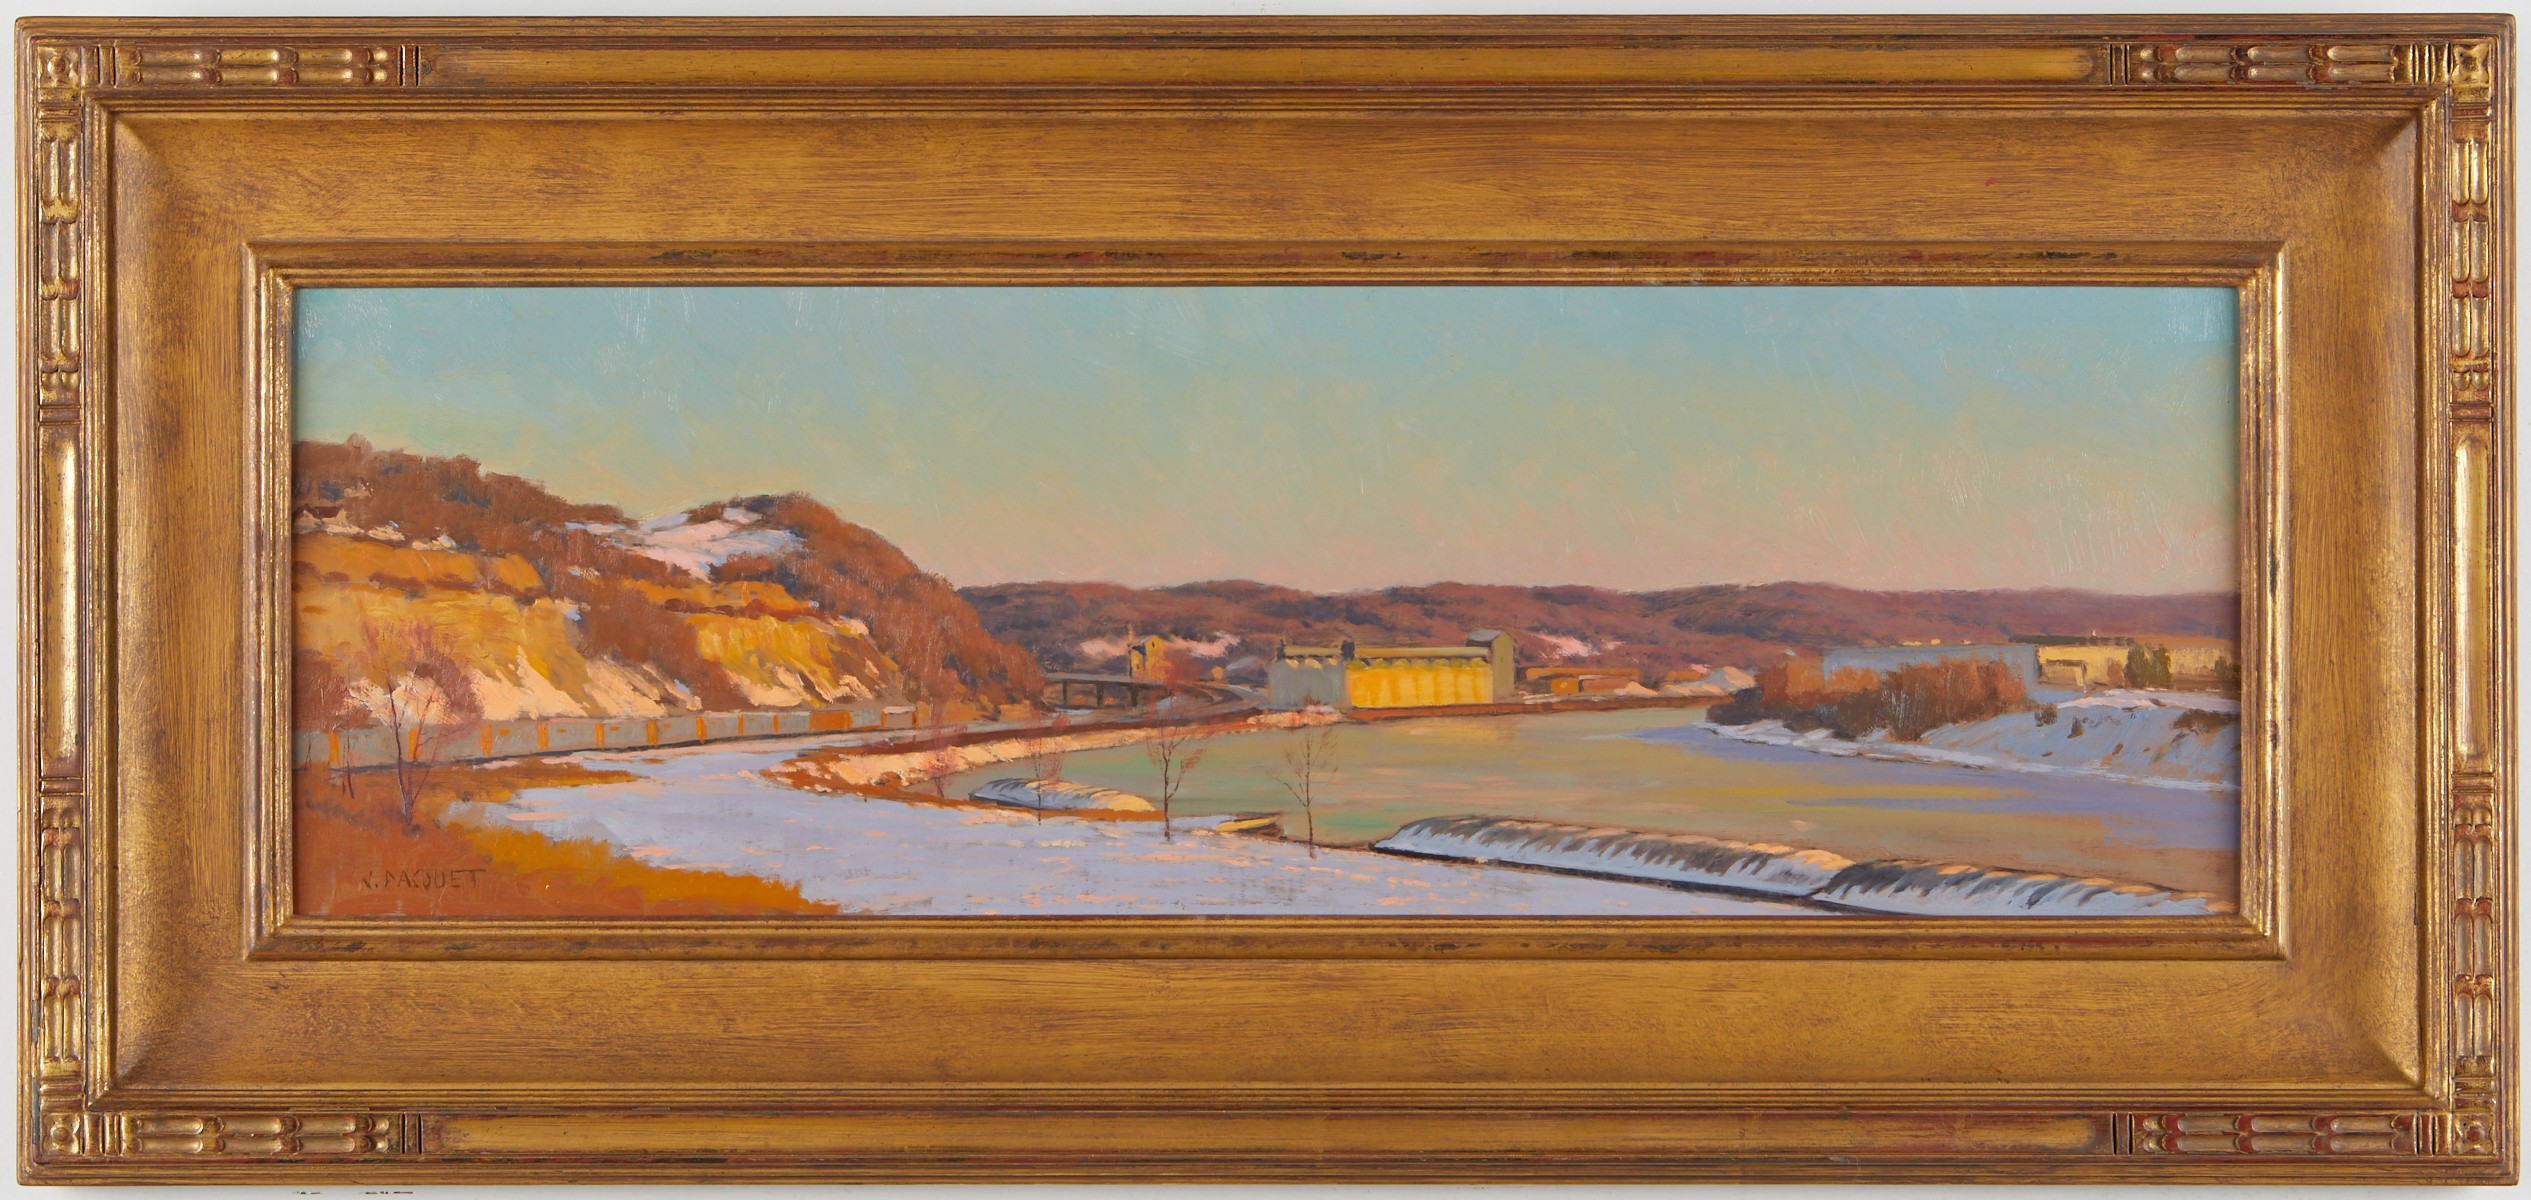 Joseph Paquet "Last Light View of Mounds" Painting